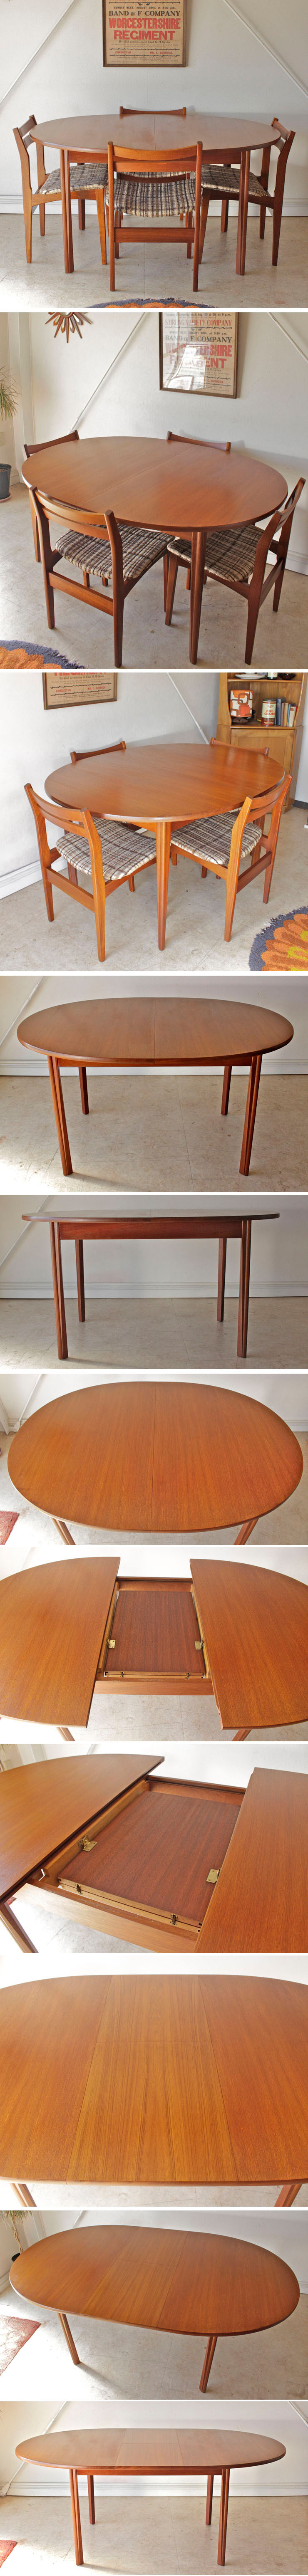 Portwood furniture　ポートウッドファニチャー・伸張式ダイニングテーブル5点セット・椅子・イギリス北欧ビンテージ家具